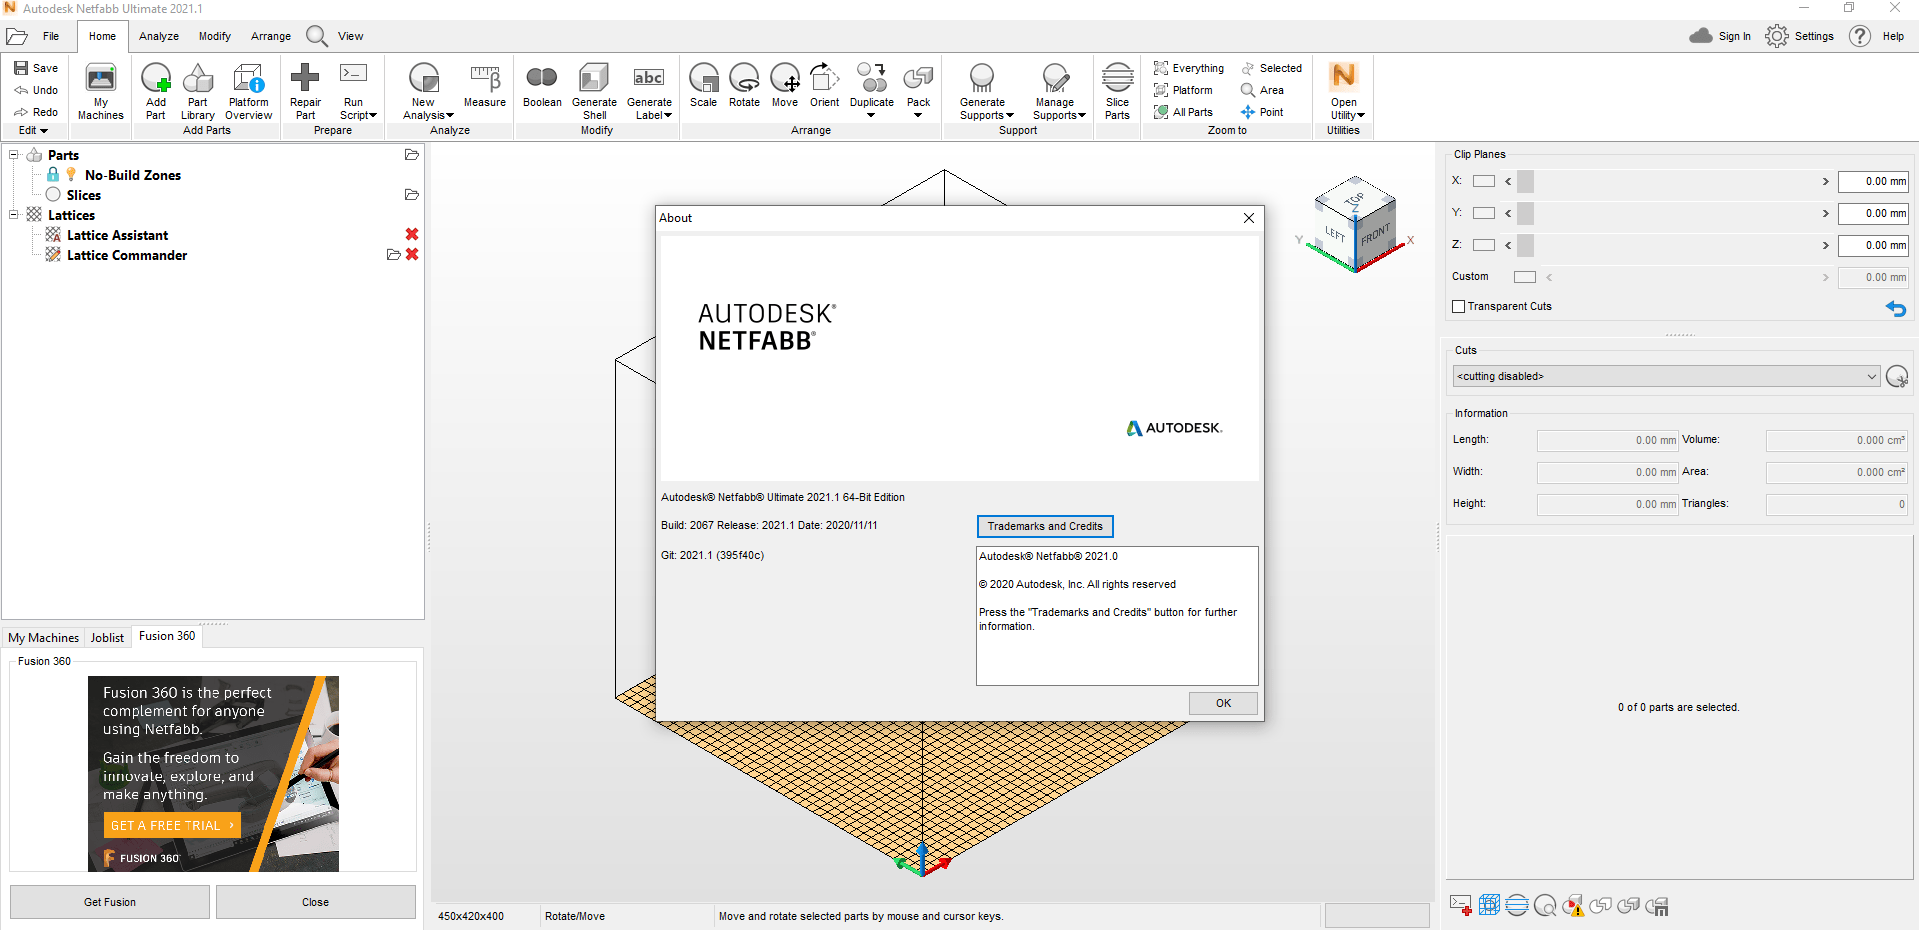 Autodesk Netfabb Ultimate 2021.1 R1 (x64) Multilanguage